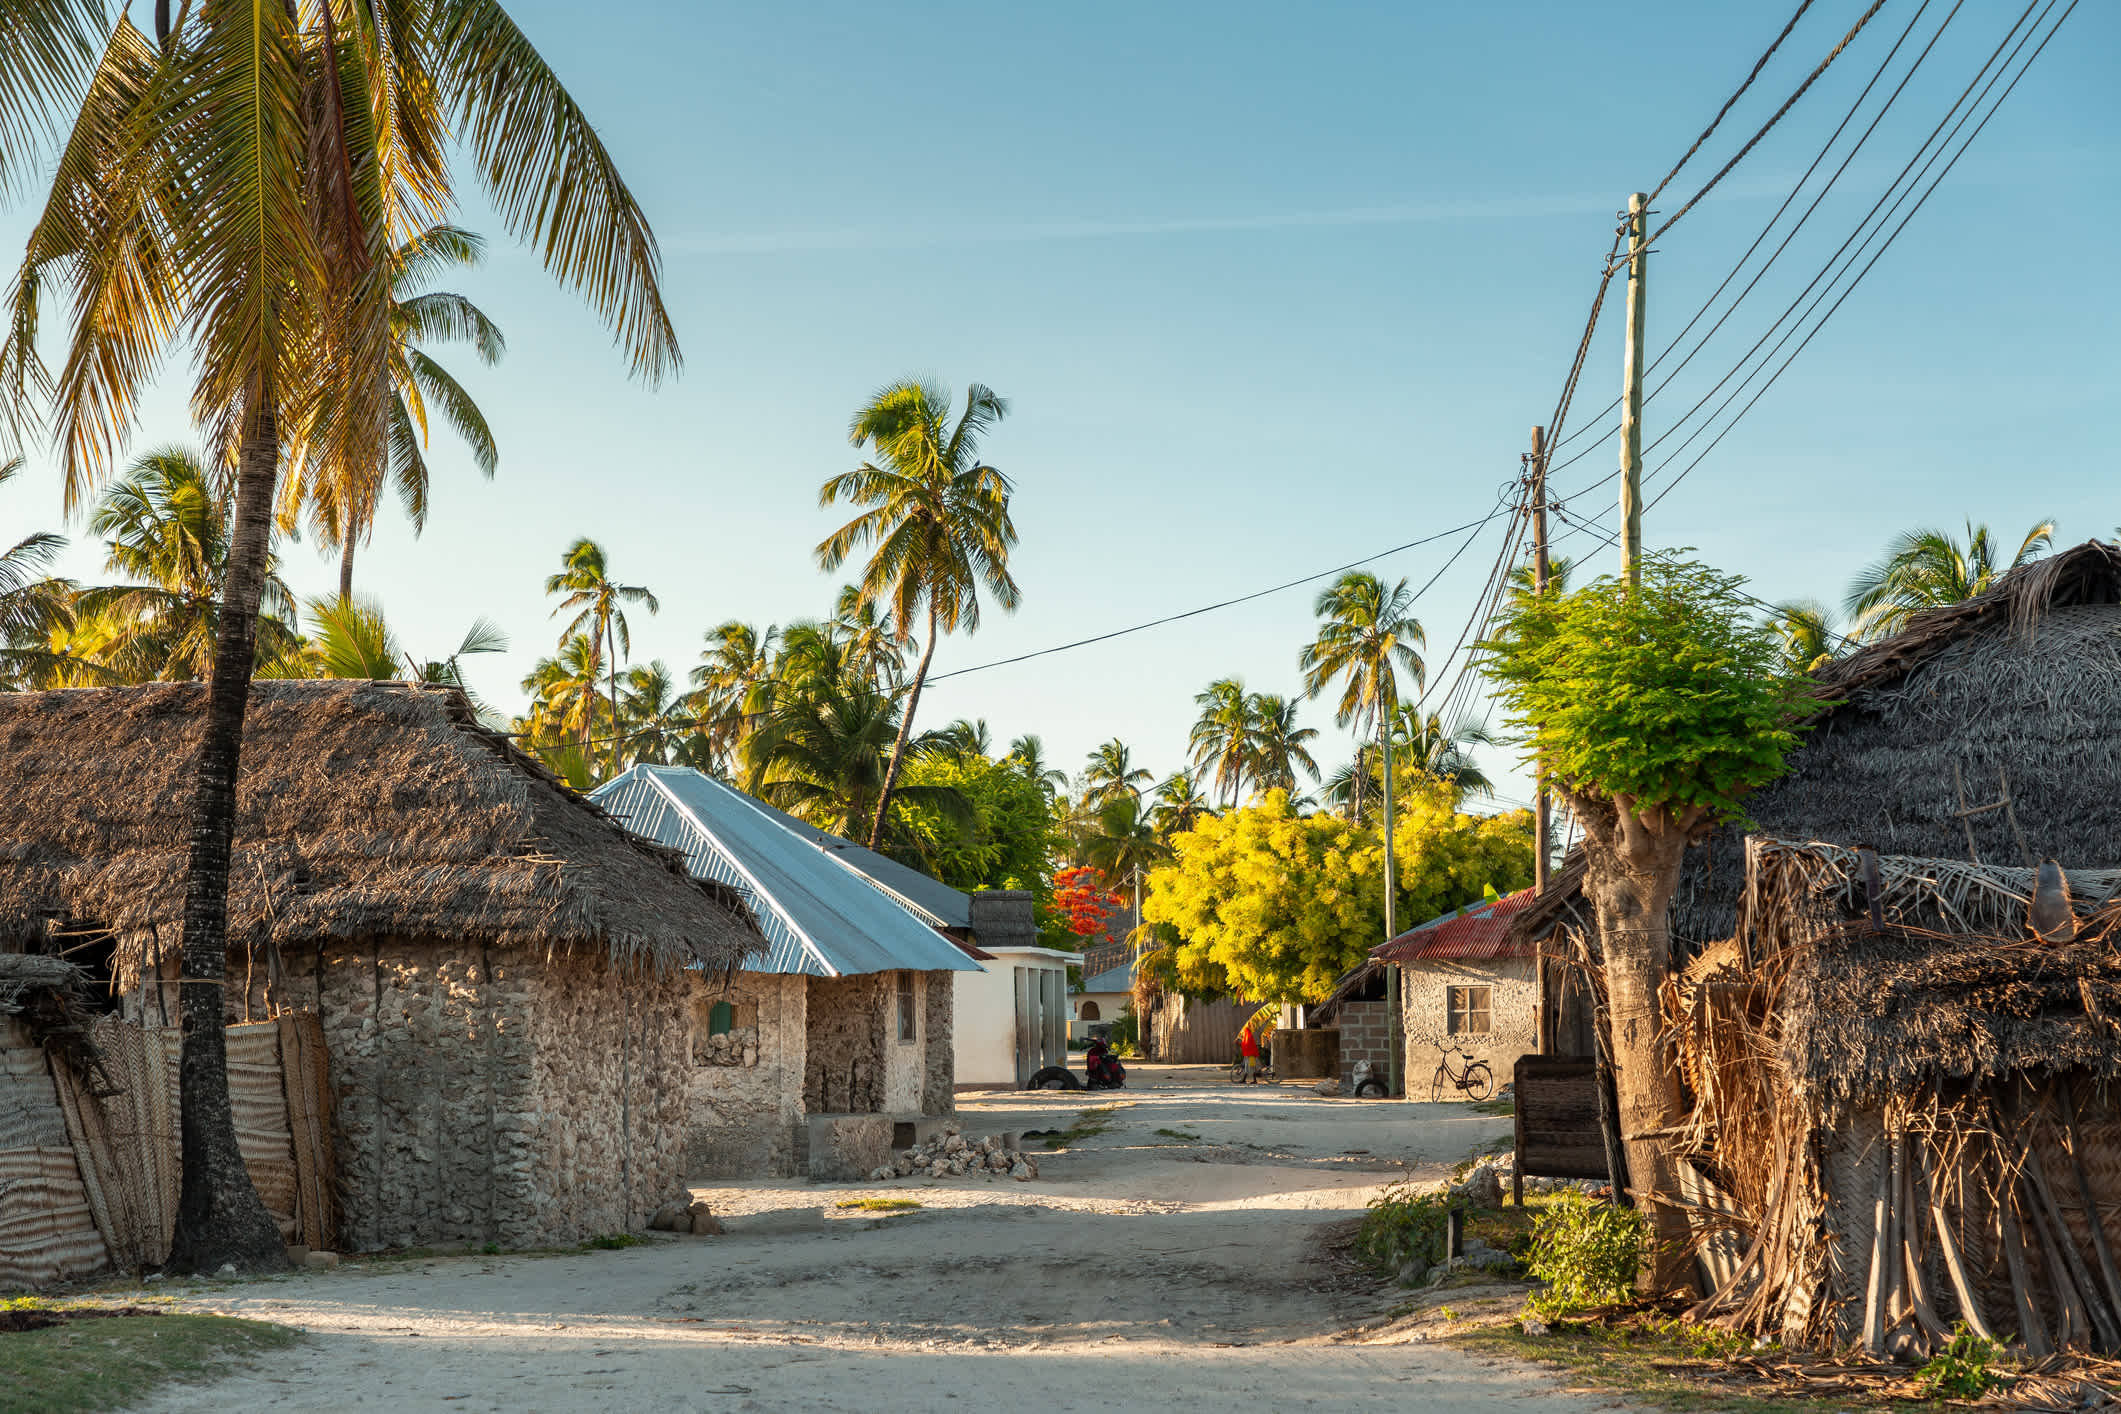 Leere Straße mit Palmen im afrikanischen Dorf Jambiani, Sansibar, Tansania